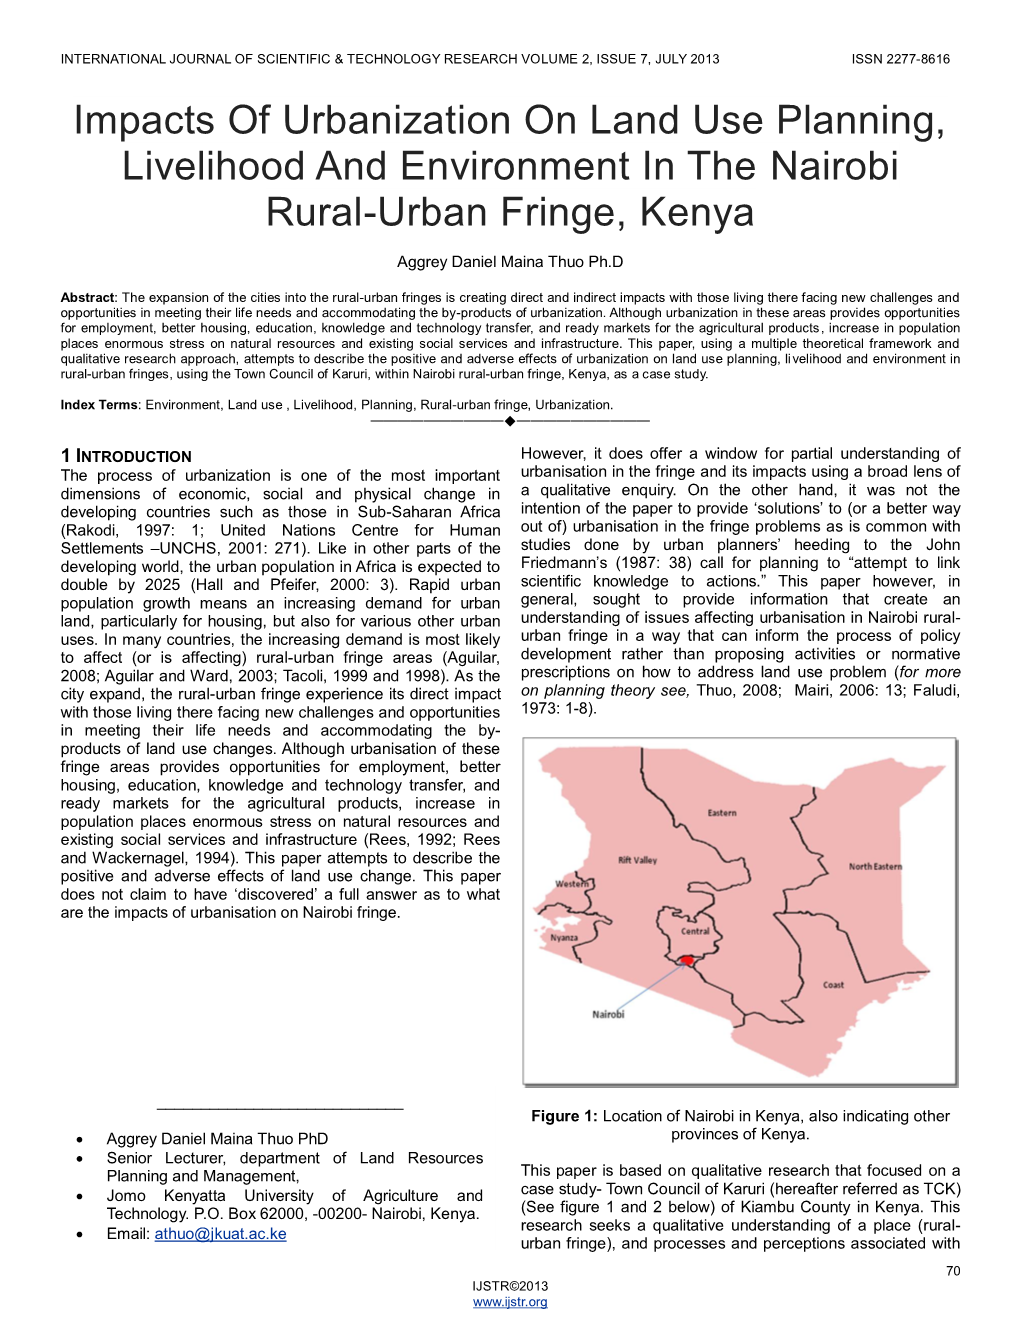 Impacts of Urbanization on Land Use Planning, Livelihood and Environment in the Nairobi Rural-Urban Fringe, Kenya